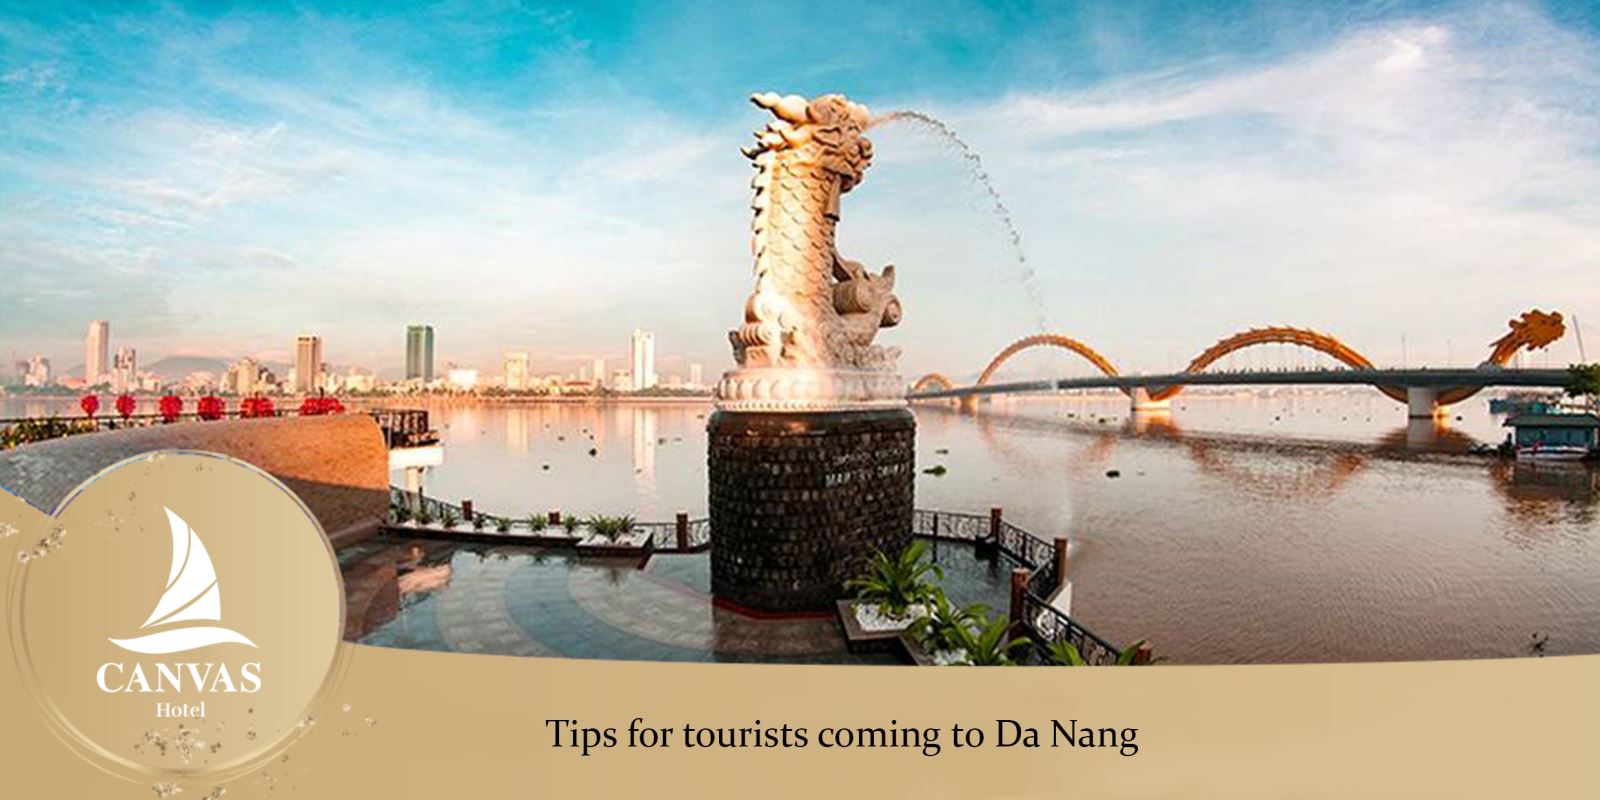 TRAVEL TO DA NANG – TIPS FOR TOURISTS COMING TO DA NANG